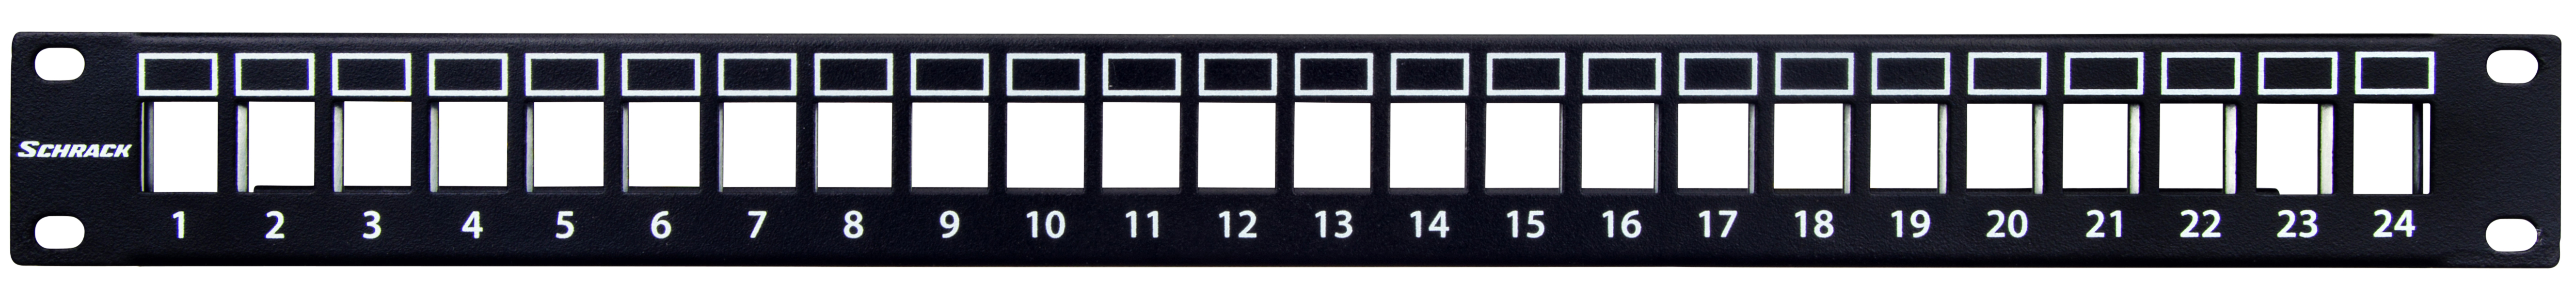 Patchpanel 19" leer für 24 Module (SFA)(SFB), 1HE, RAL9005